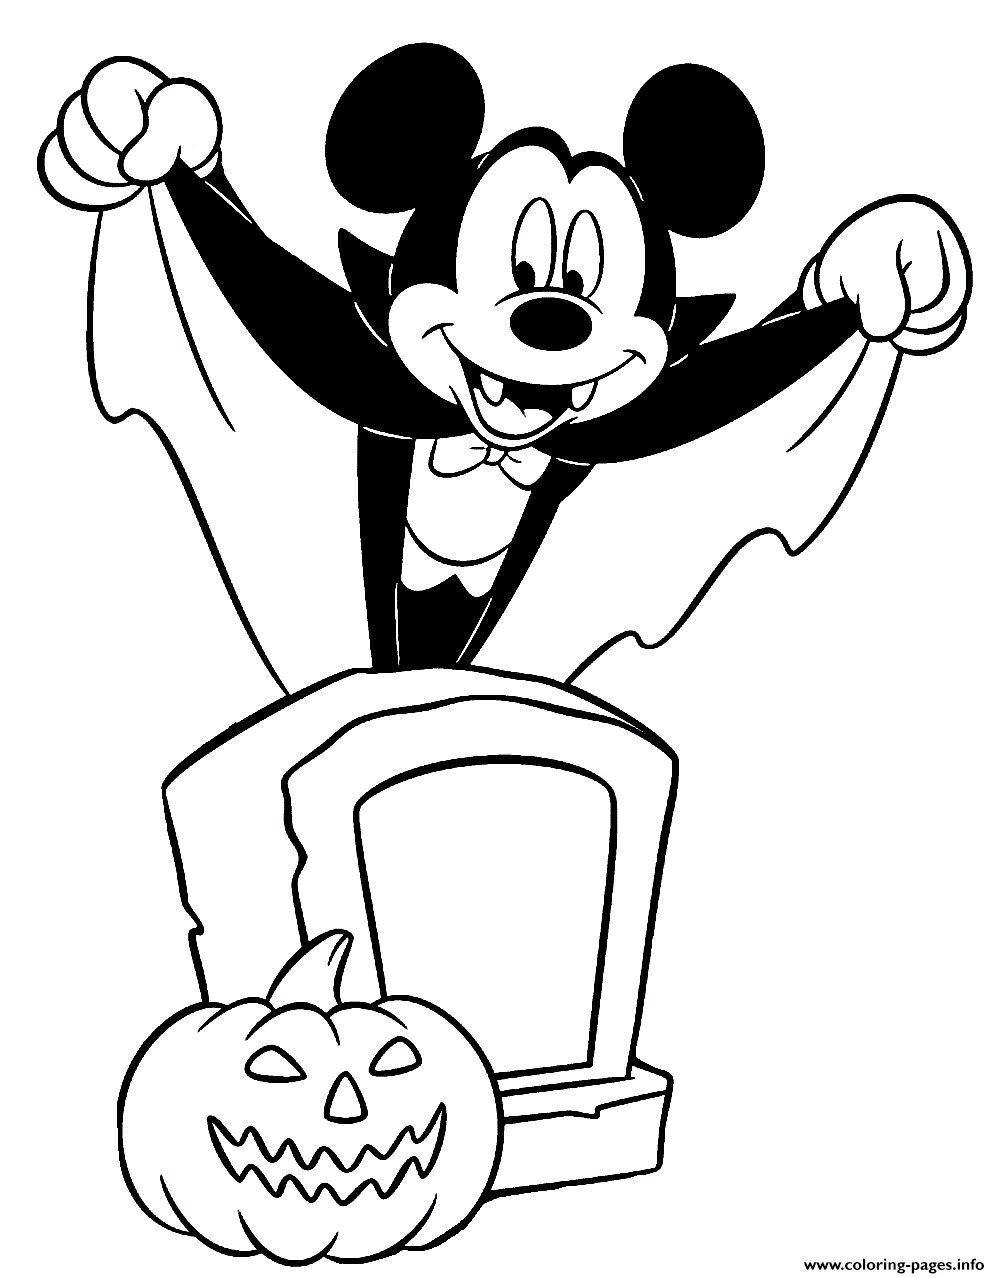 Mickey Mouse As A Vampire 2 Disney Halloween coloring